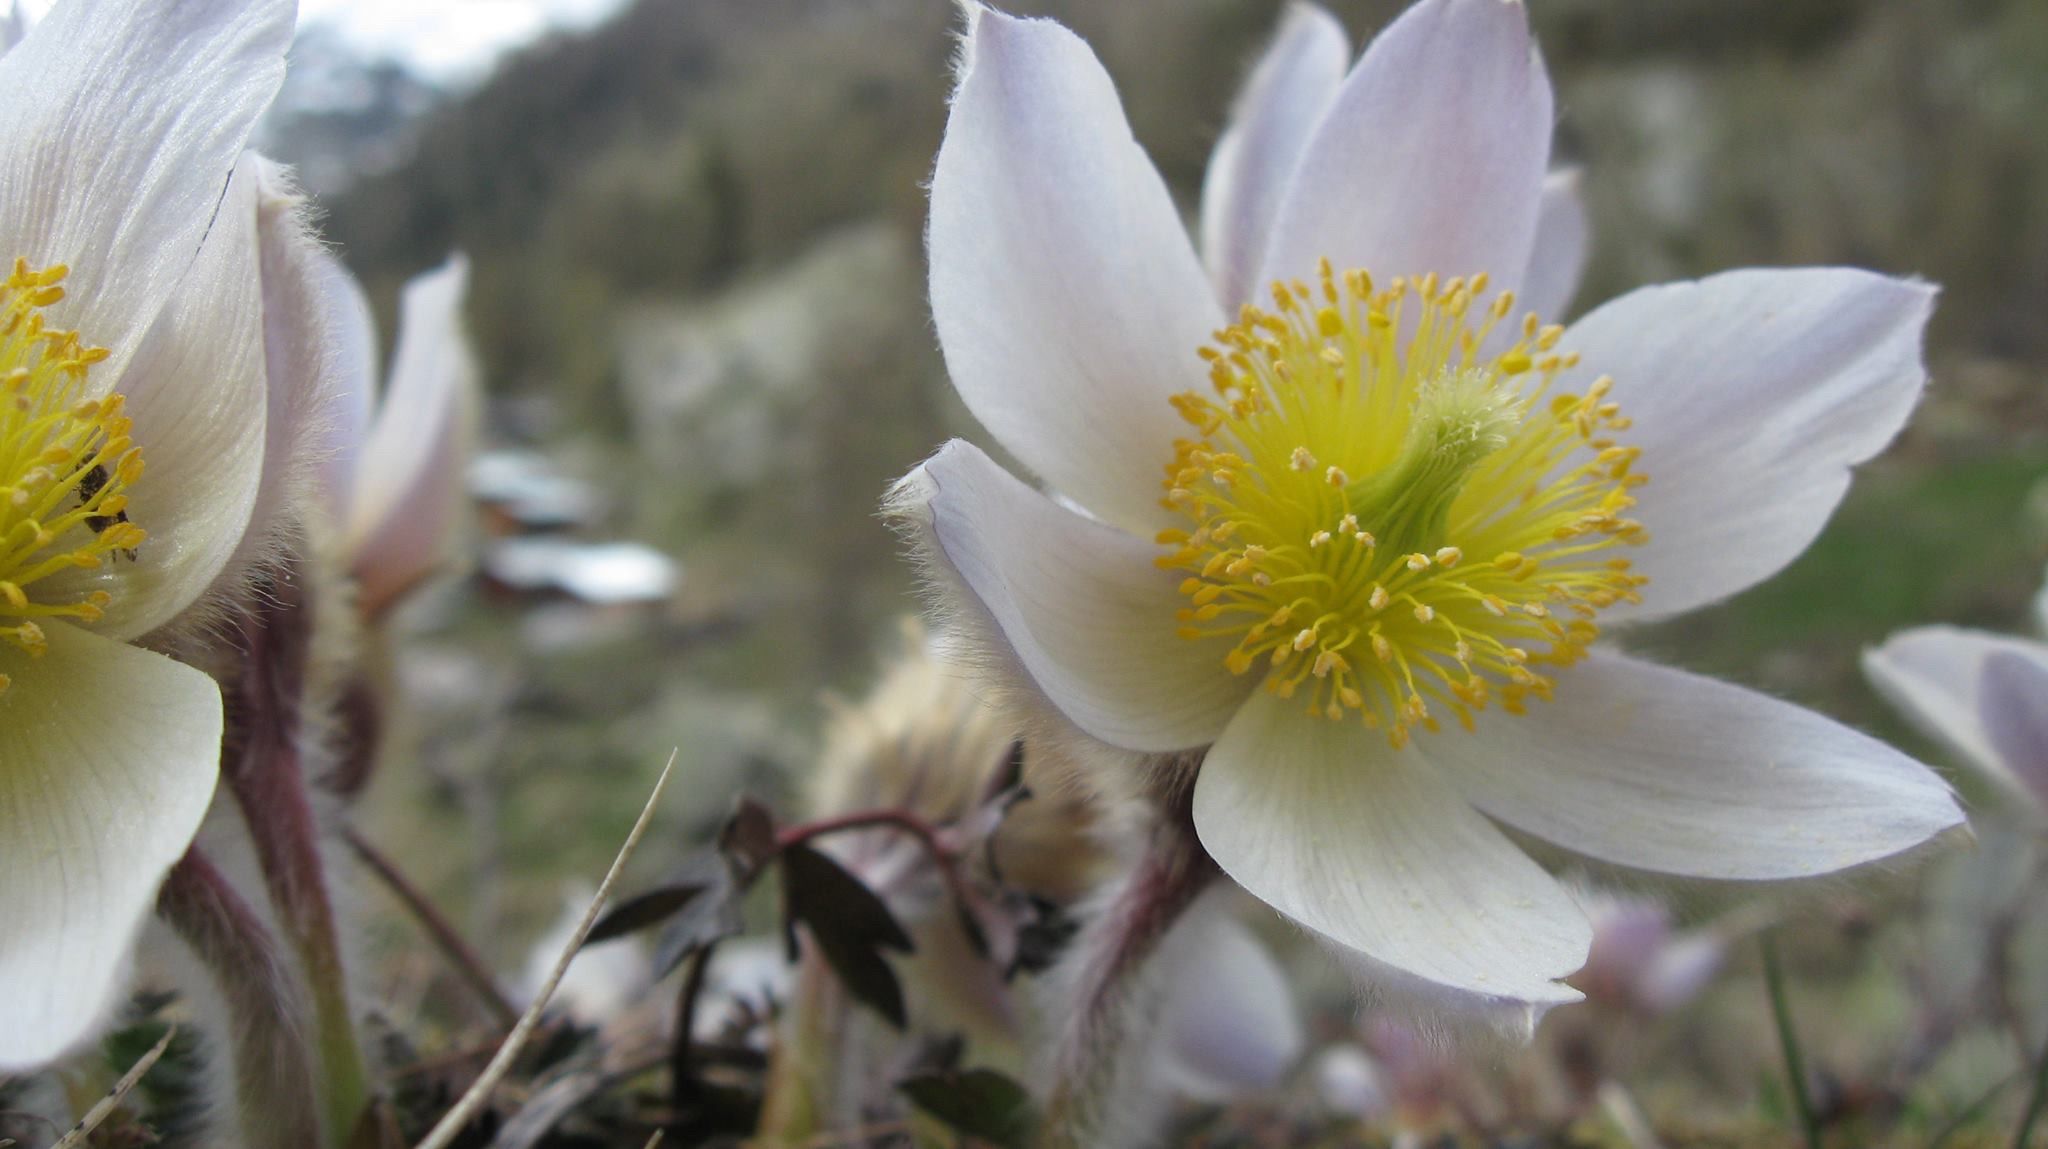 Bergbloem alpine anemone | Alpen bloemen | Pinterest